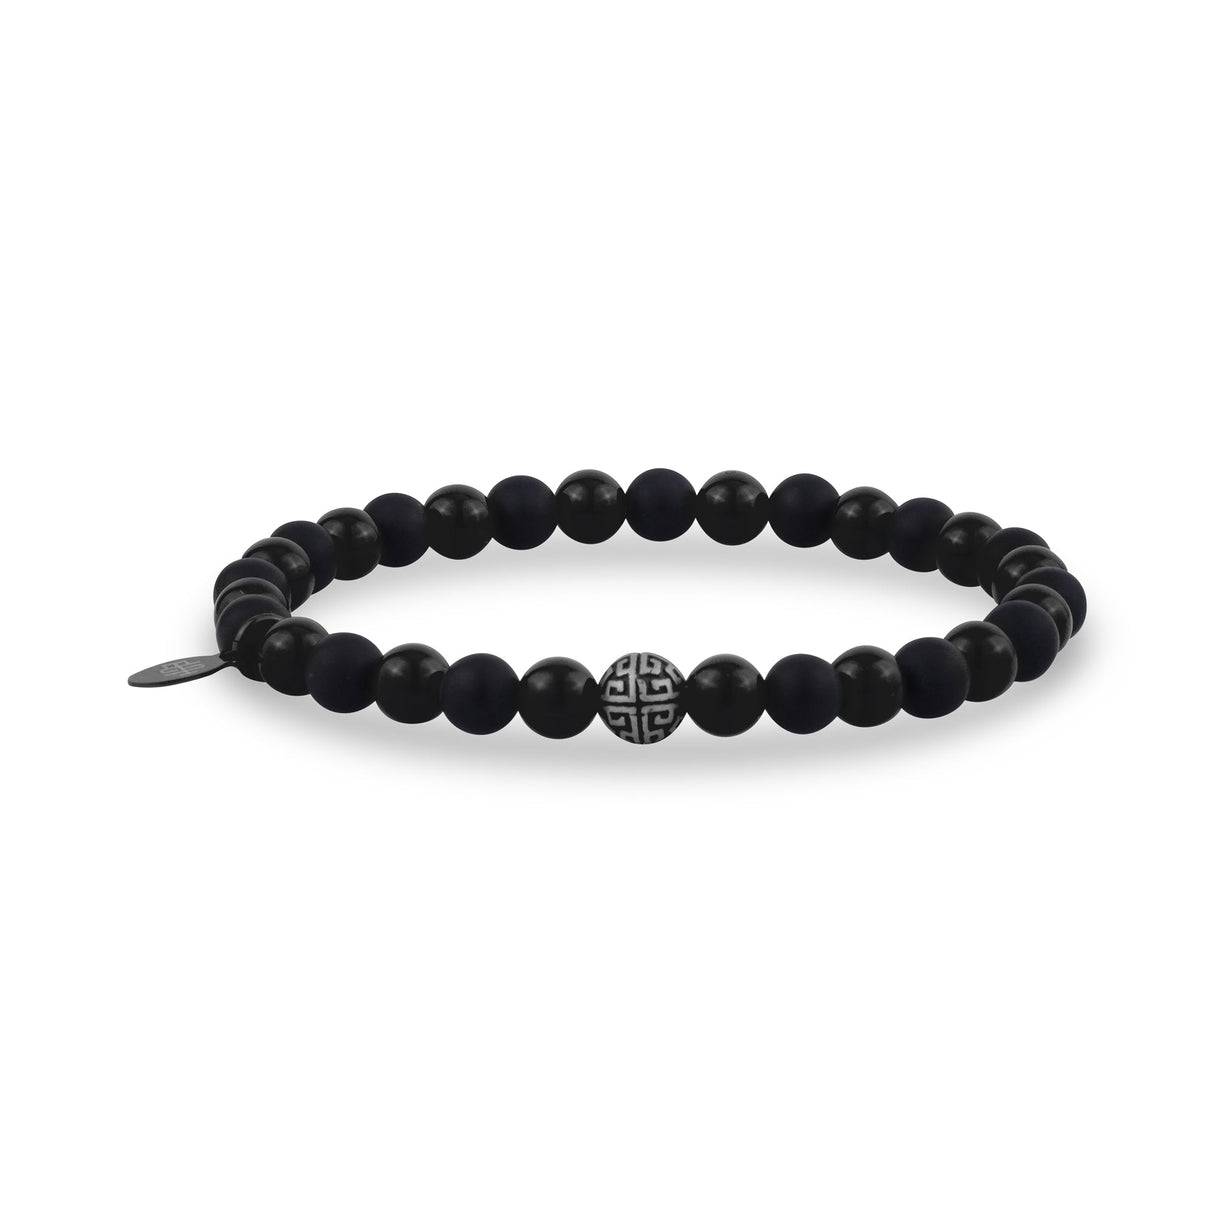 Unisex Bead Bracelet - 6mm Black Onyx Mix Stretch Bead Bracelet